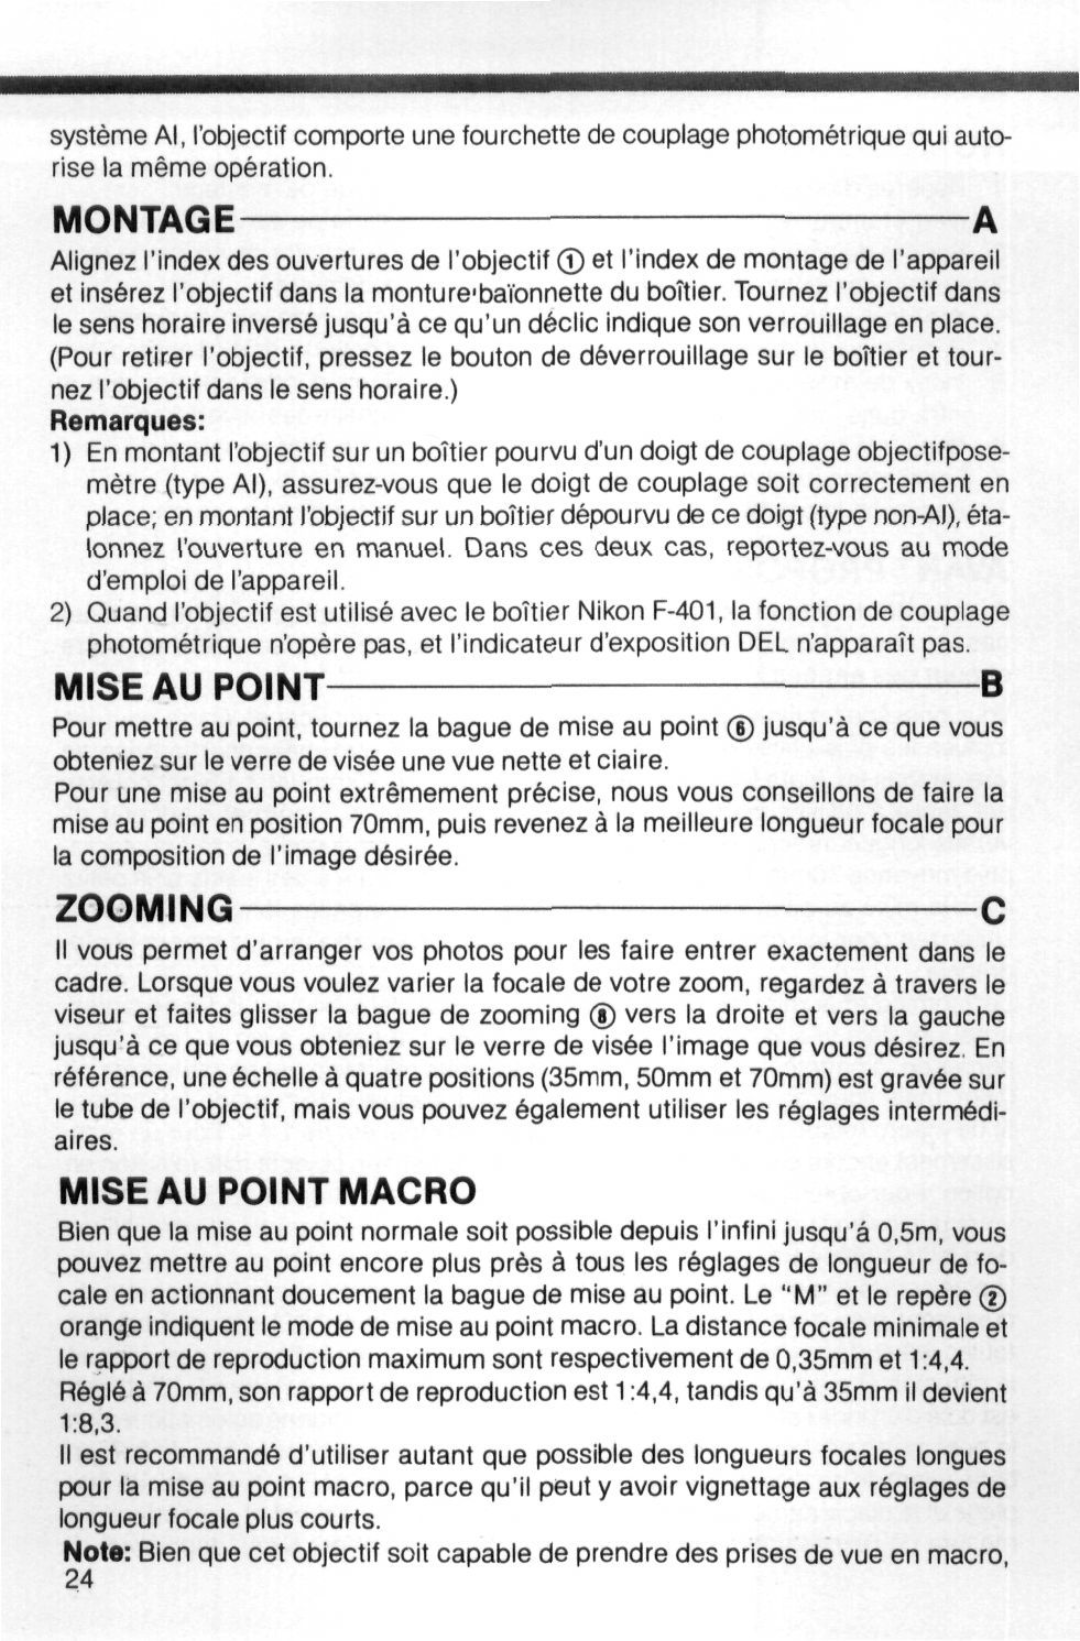 Nikon f instruction manual Montagea, Mise Au Point Macro, Zoomingc, Remarques 